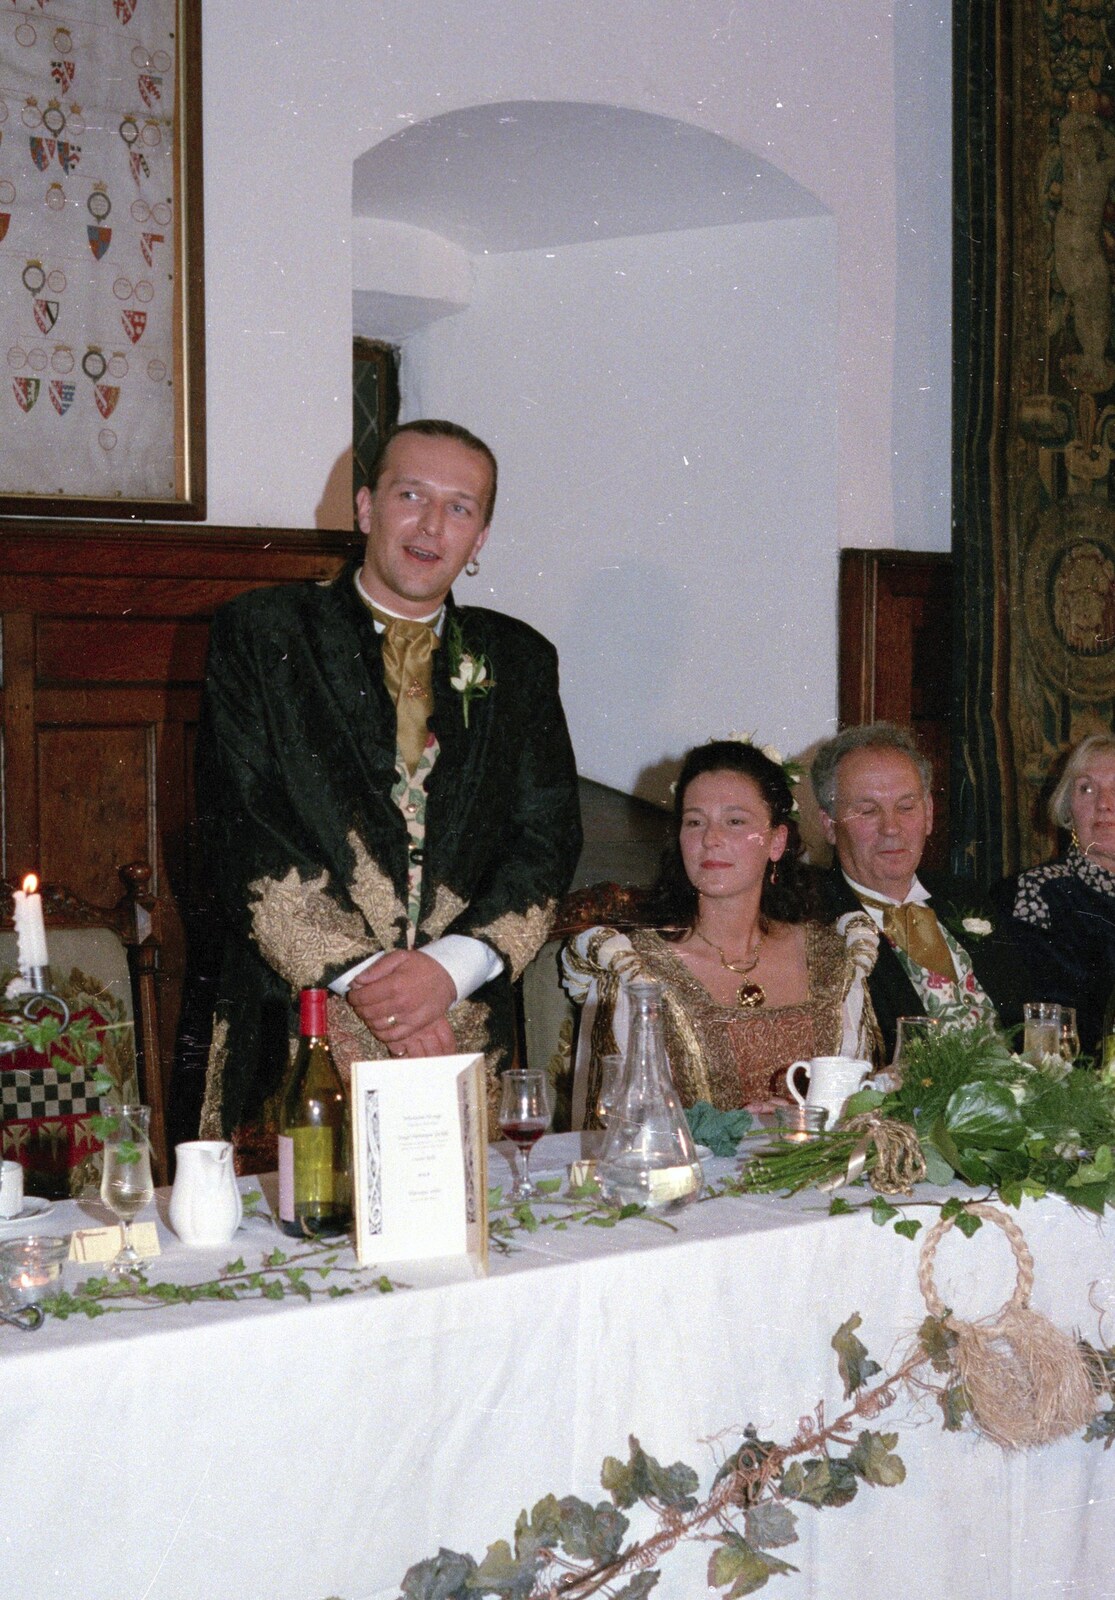 Stuart and Sarah's CISU Wedding, Naworth Castle, Brampton, Cumbria - 21st September 1996: Stuart gives a speech